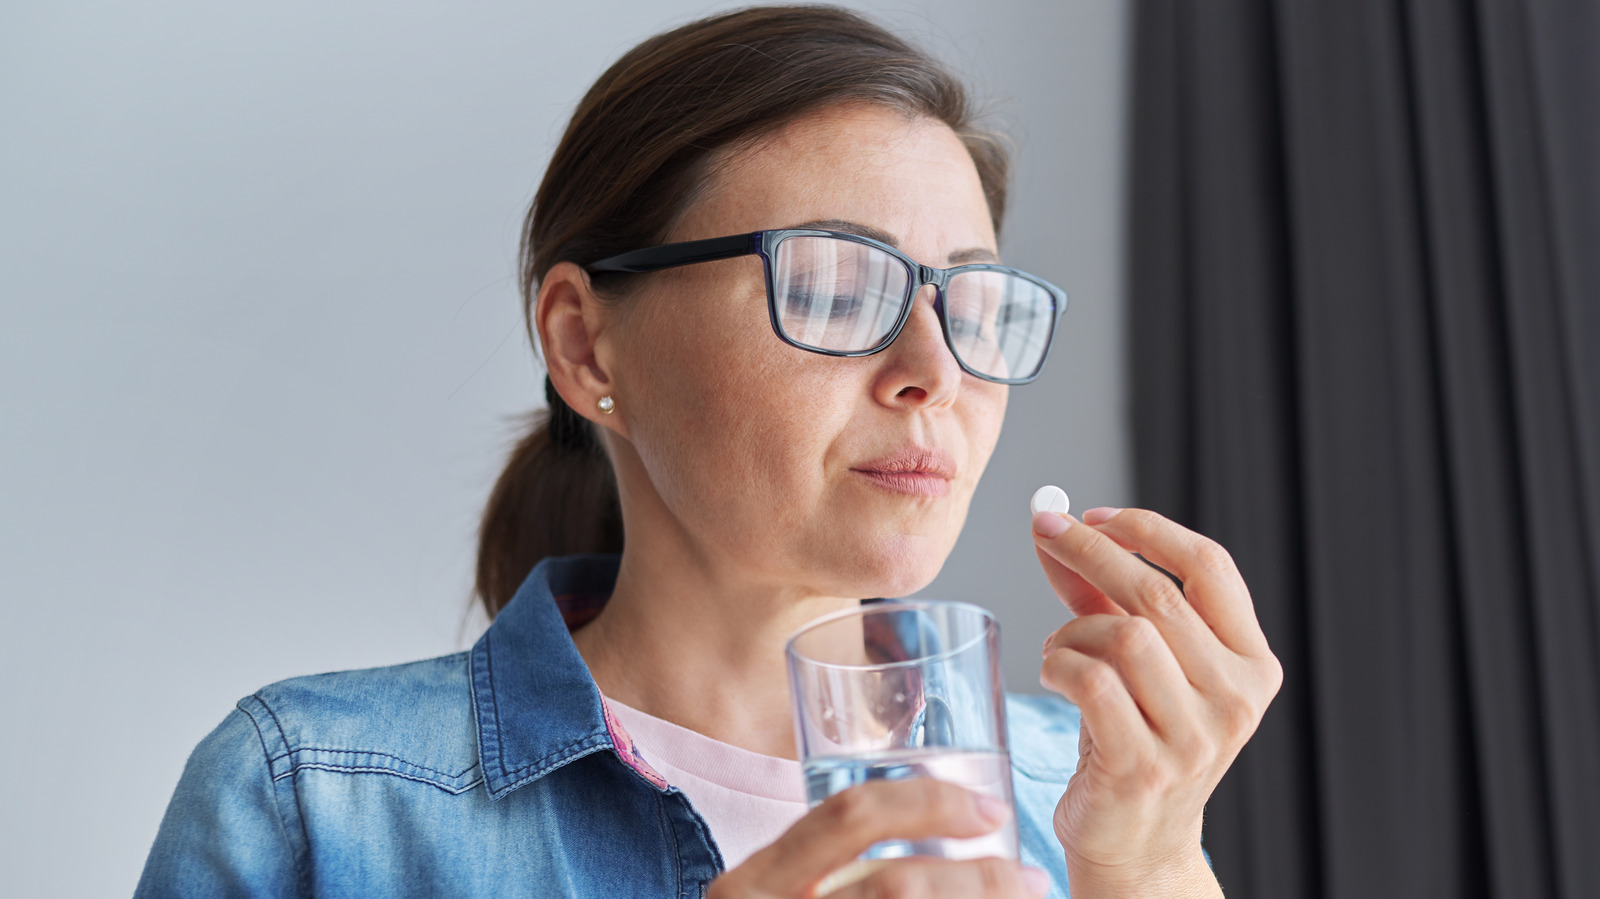 Is Mucinex An Effective Medication To Treat Seasonal Allergies? – Health Digest